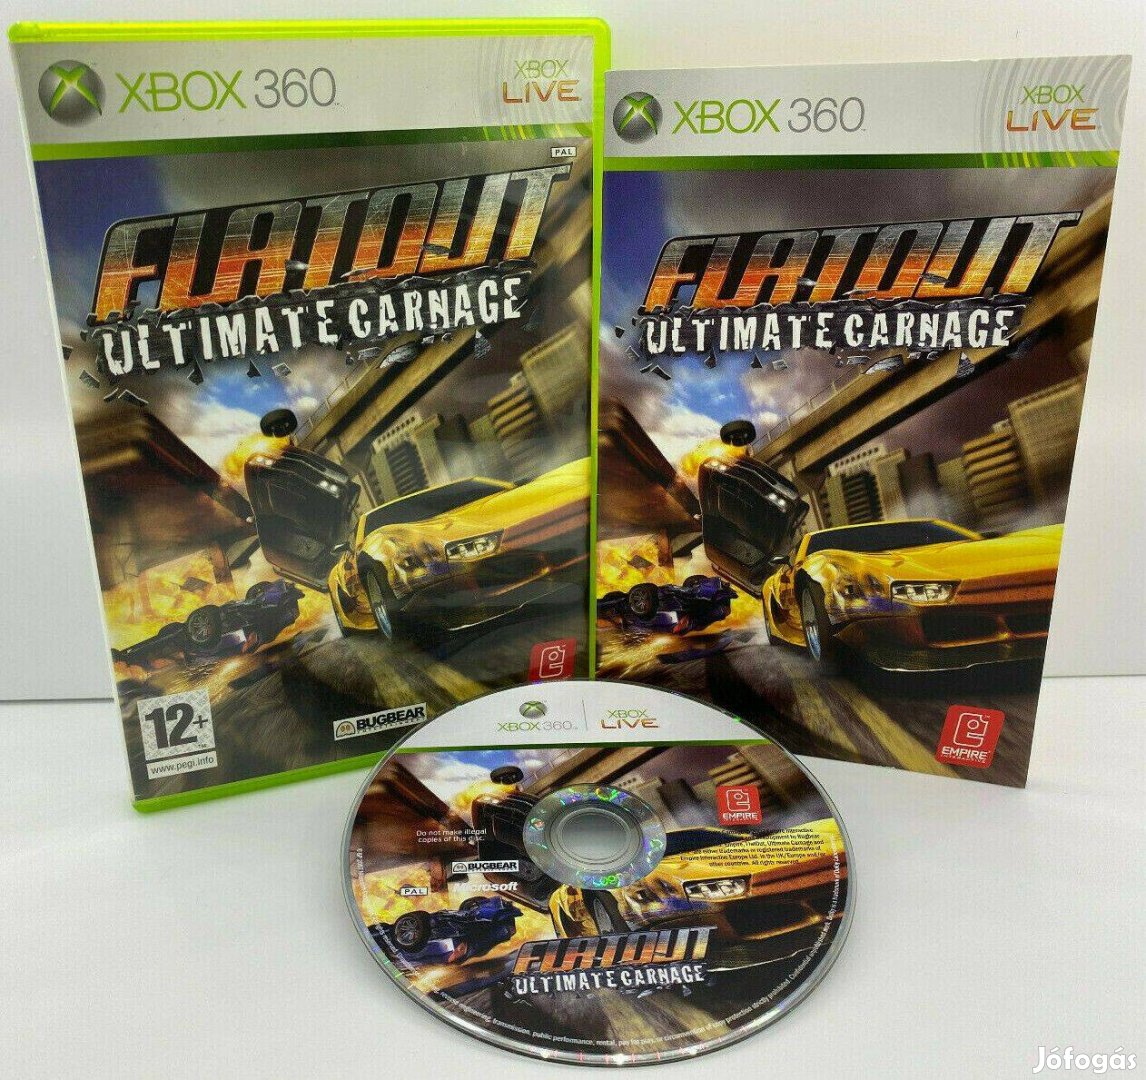 Xbox 360 Flatout Ultimate Carnage